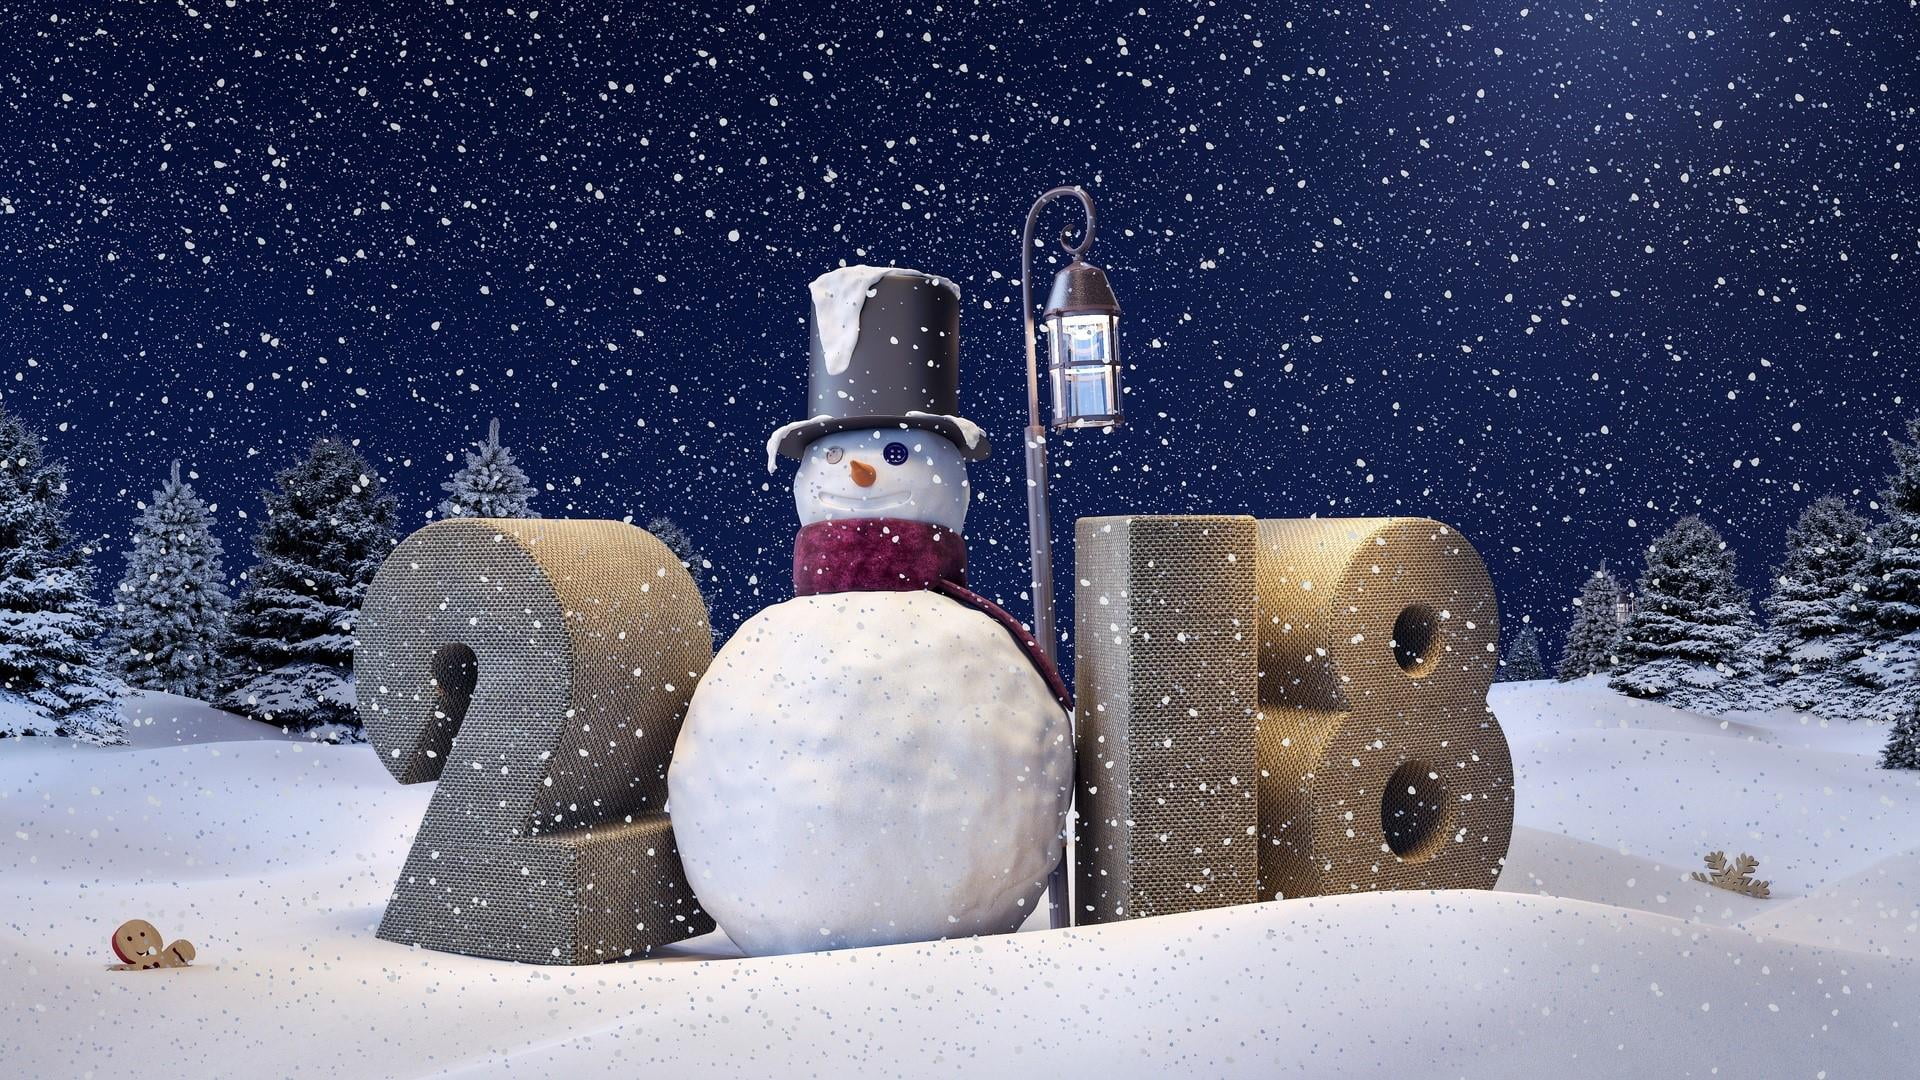 2018, snowman, snowfall, snowing, lantern, winter, freezing